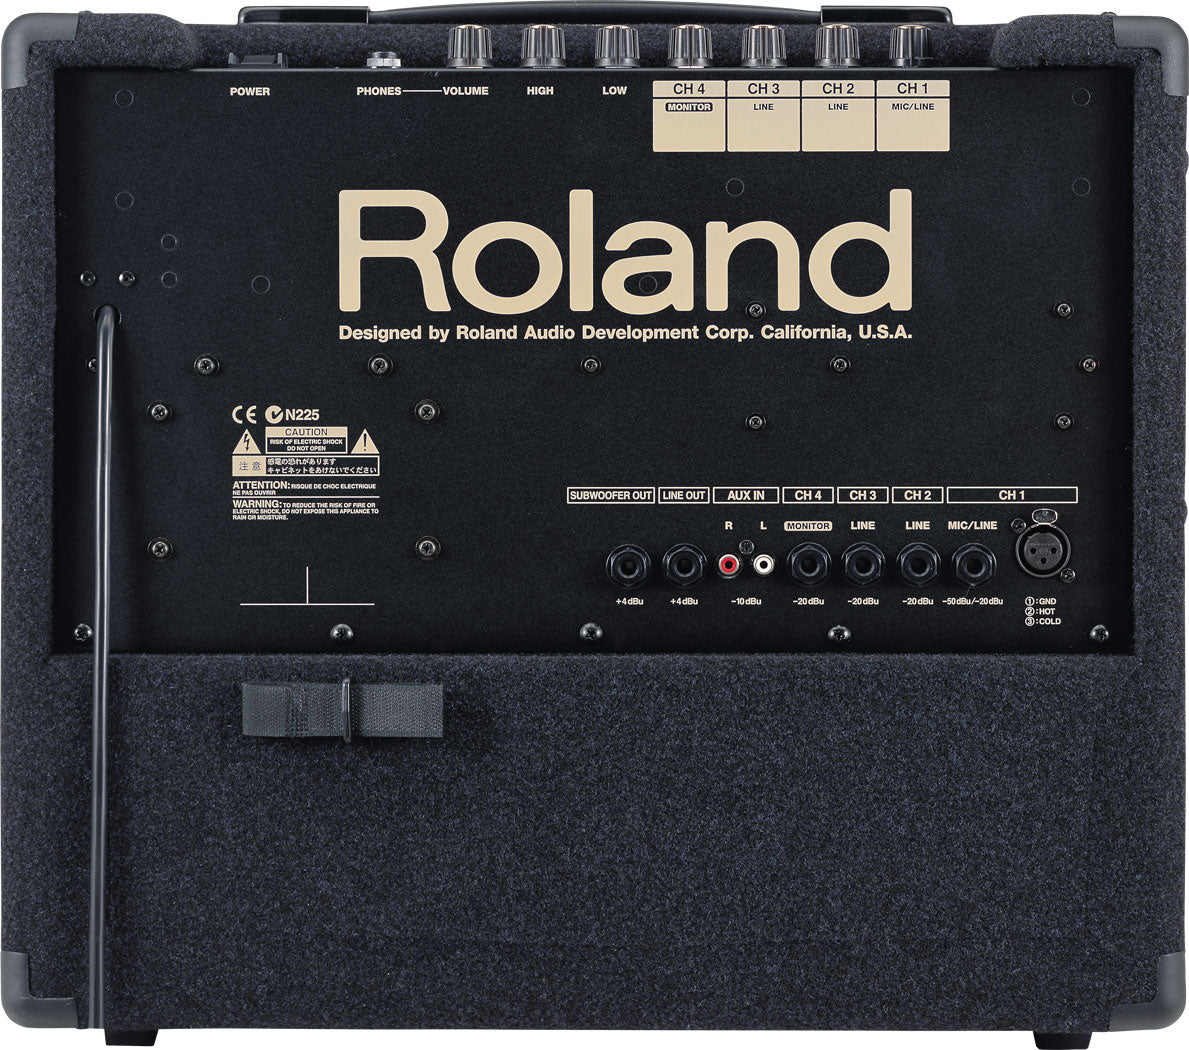 Roland KC-150 4-Ch Mixing Keyboard Amplifier